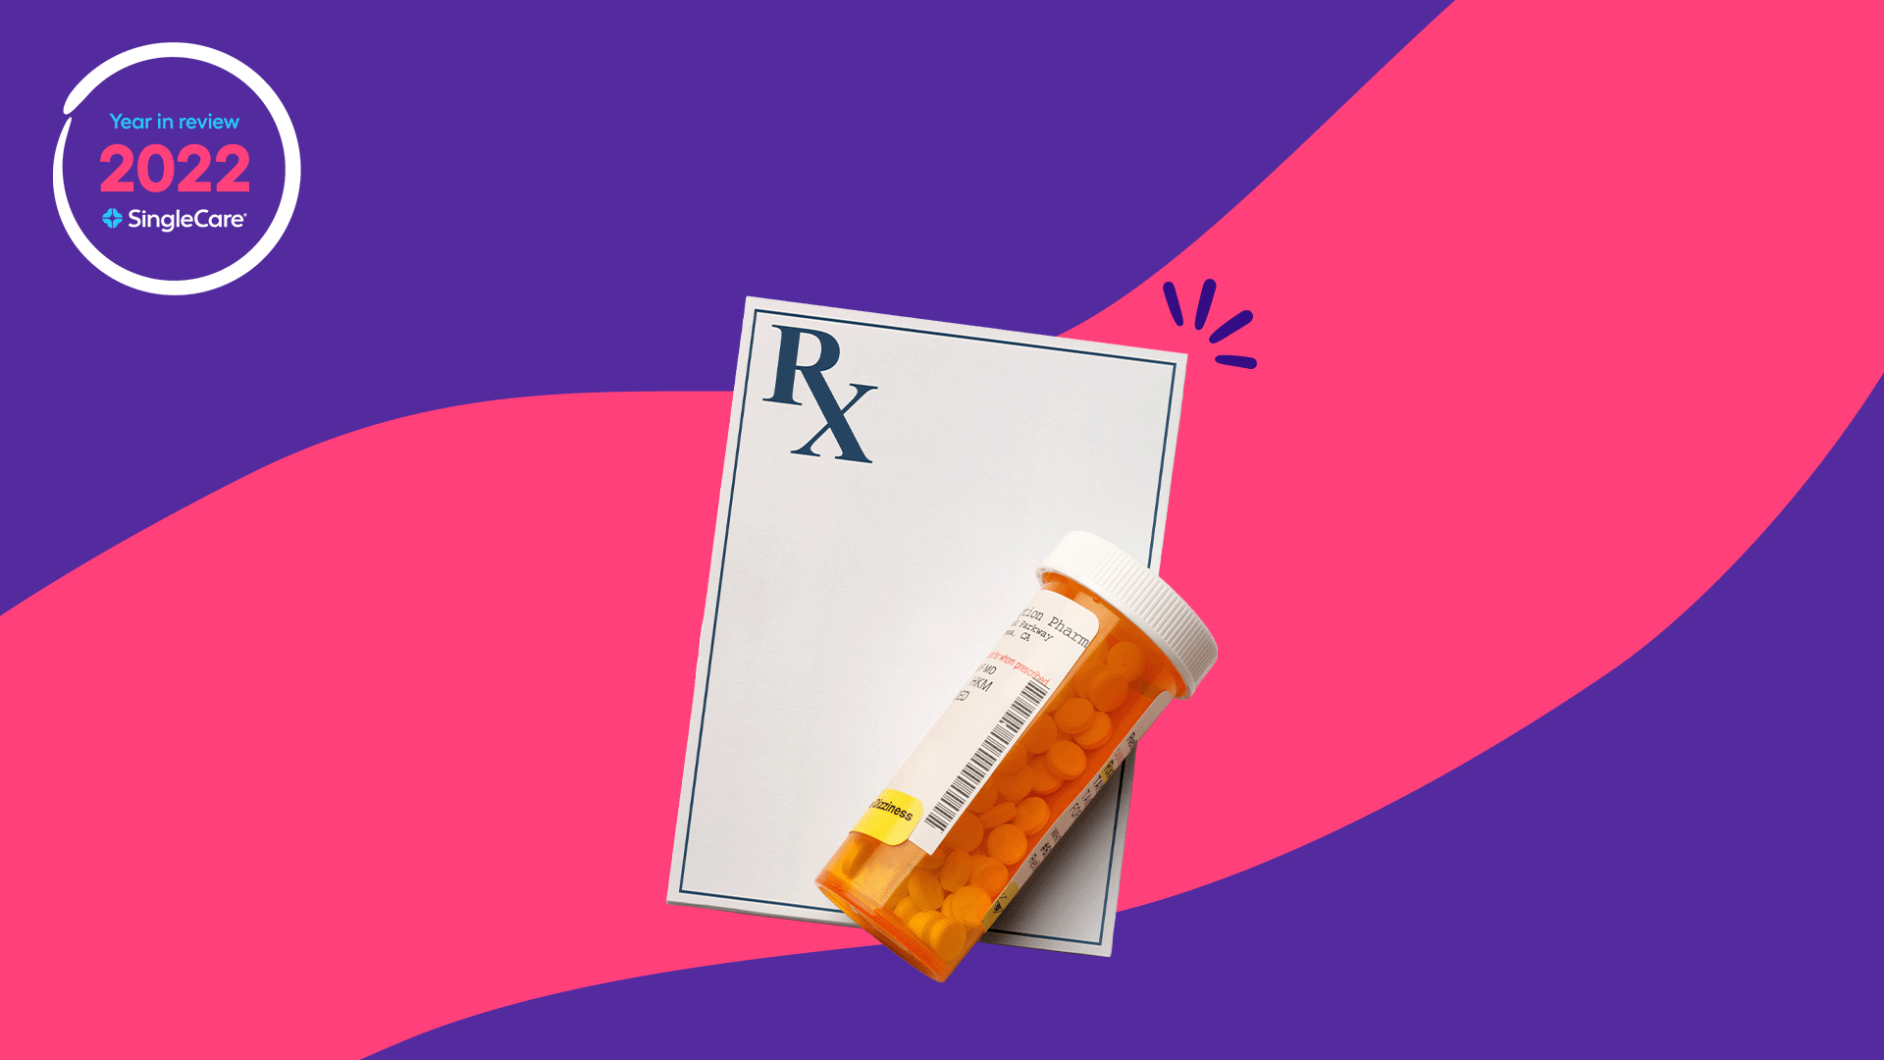 Prescription pad and bottle - most prescribed drugs